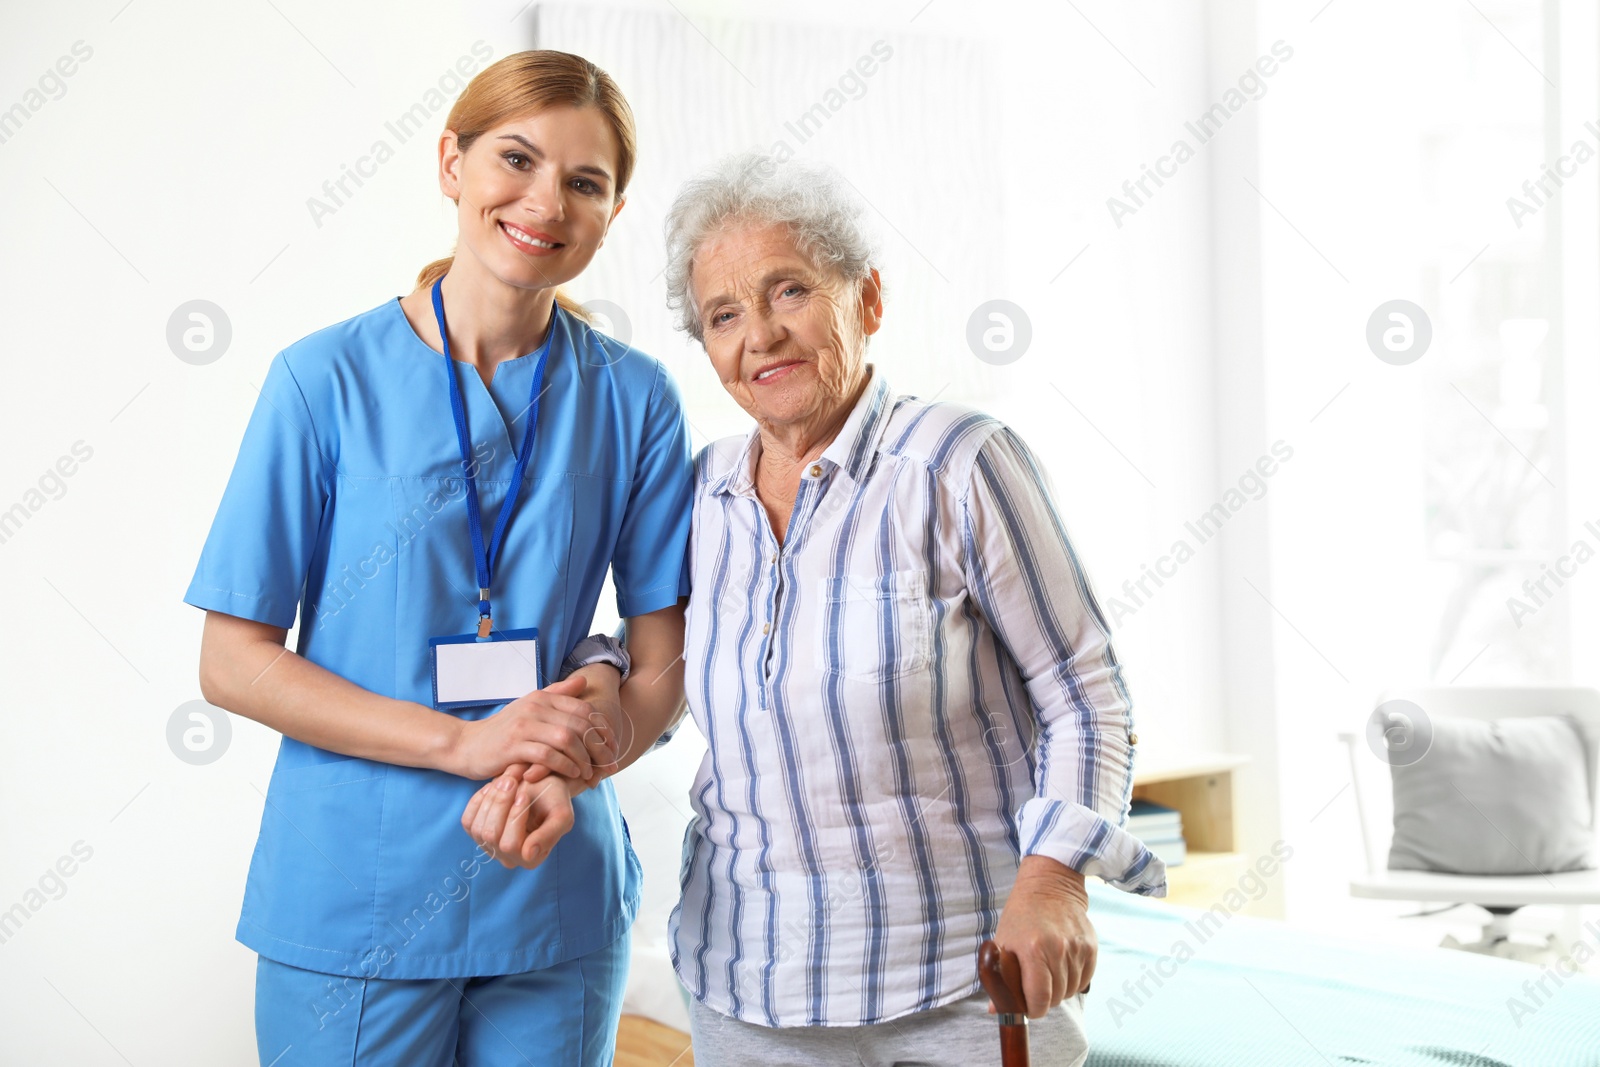 Photo of Nurse in uniform assisting elderly woman indoors